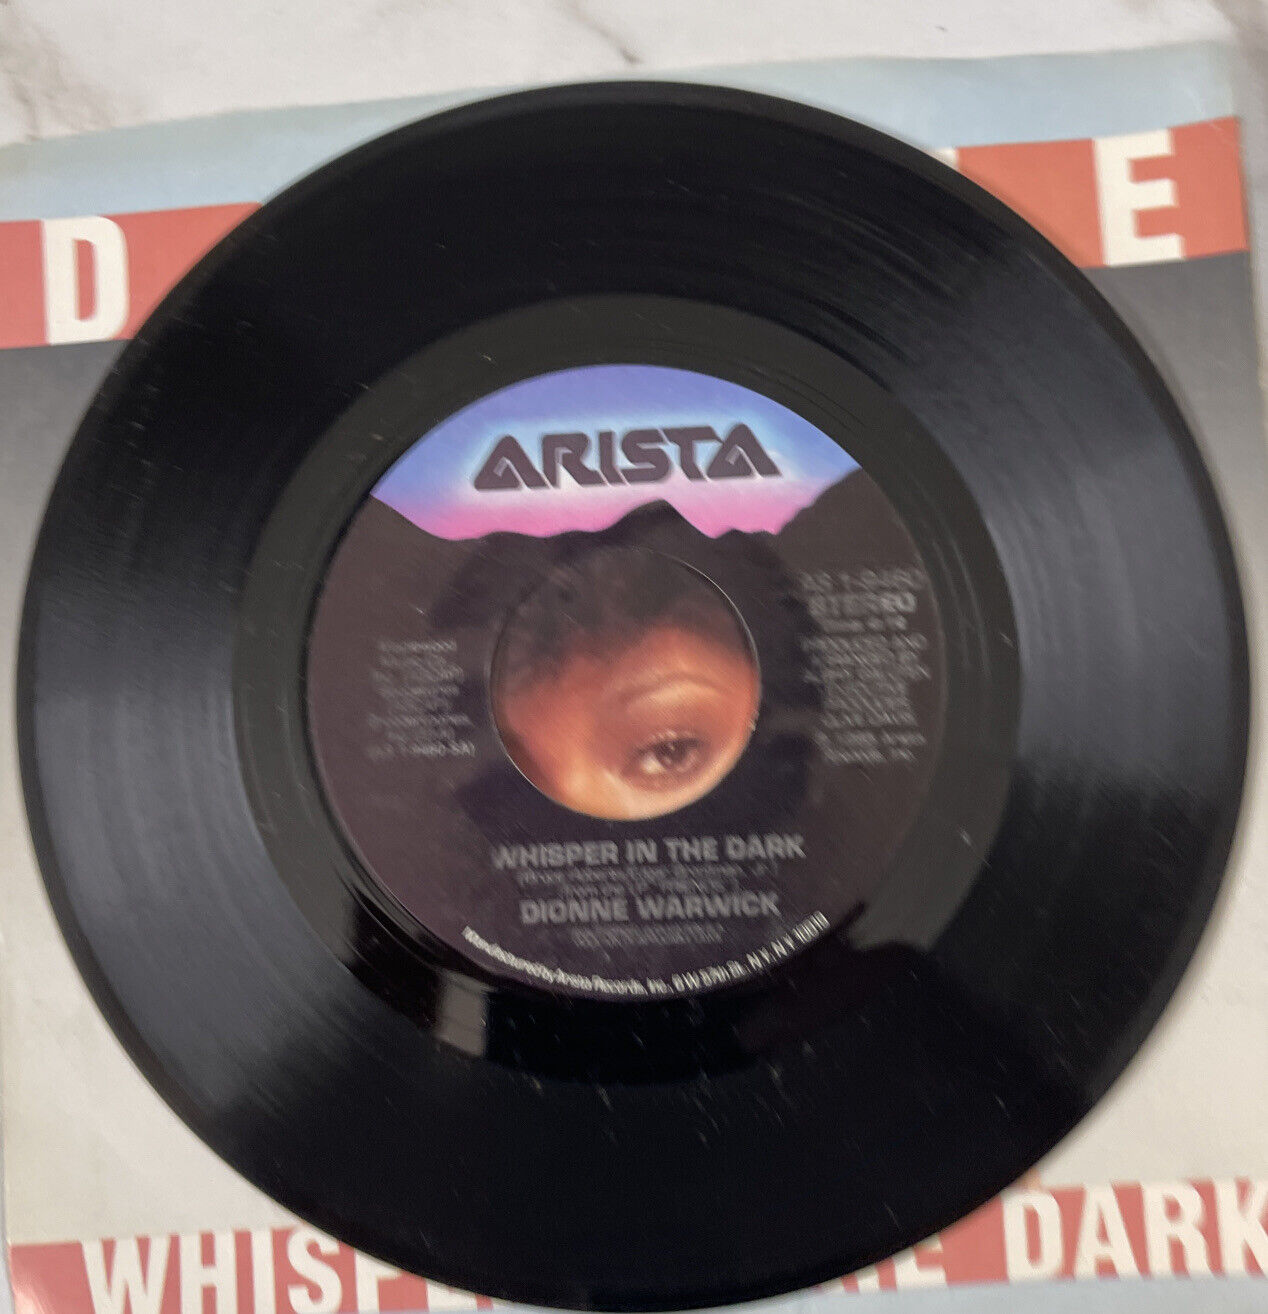 Dionne Warwick Whisper In The Dark Single Record Arista 1986 AS1-9460